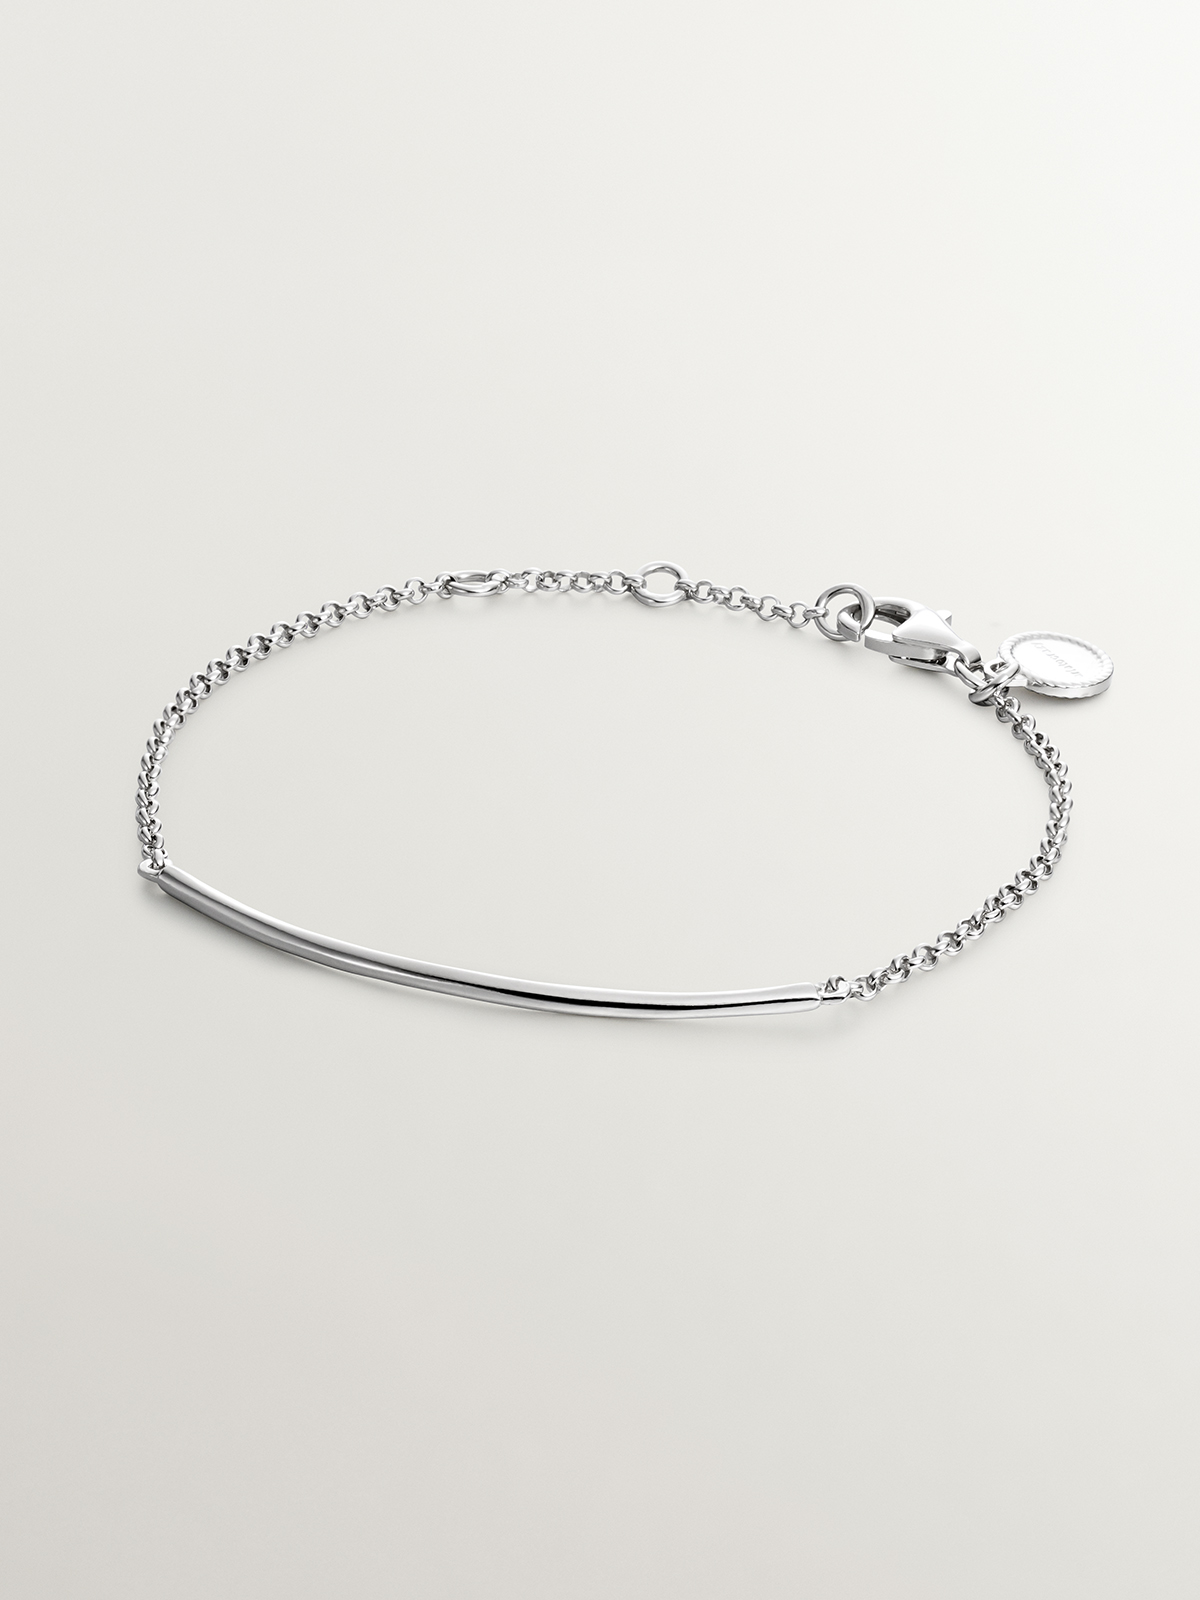 925 Silver bracelet with tube shape